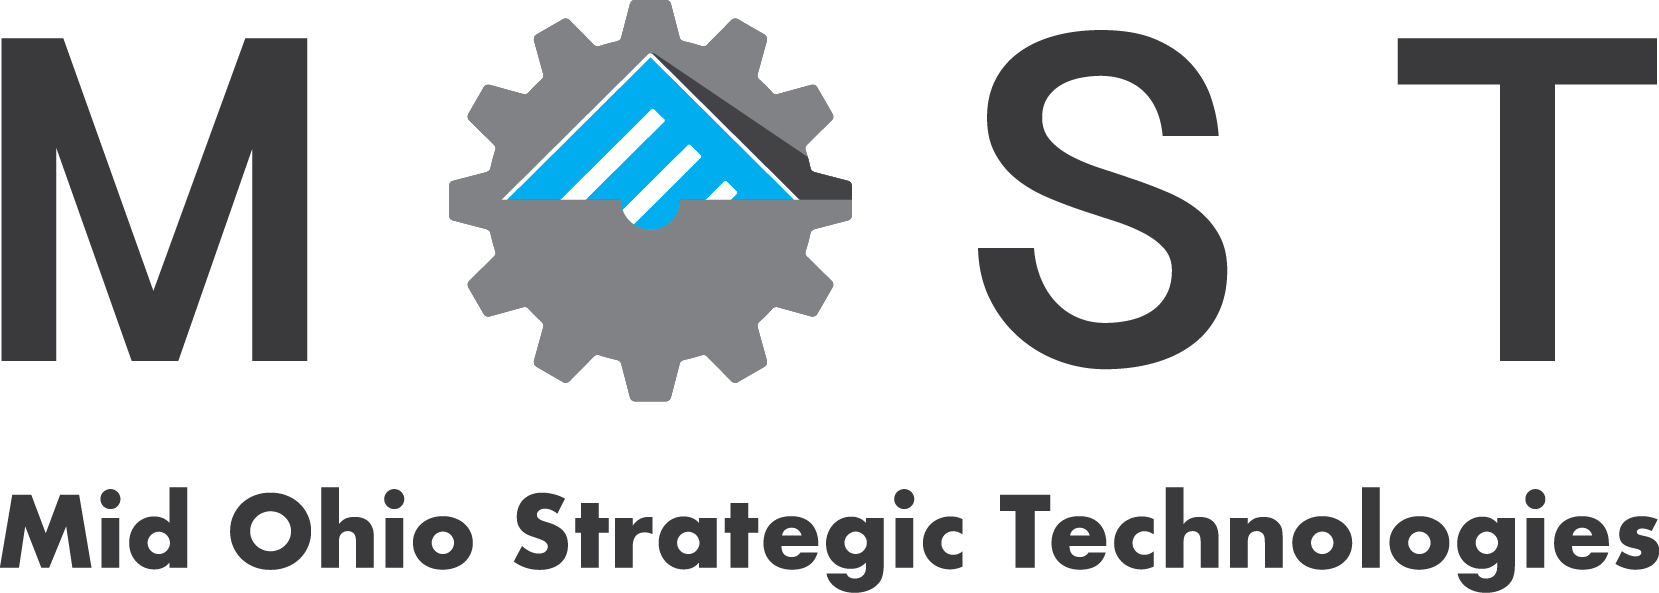 Columbus Logo - Mid Ohio Strategic Technologies | Printers | IT Services